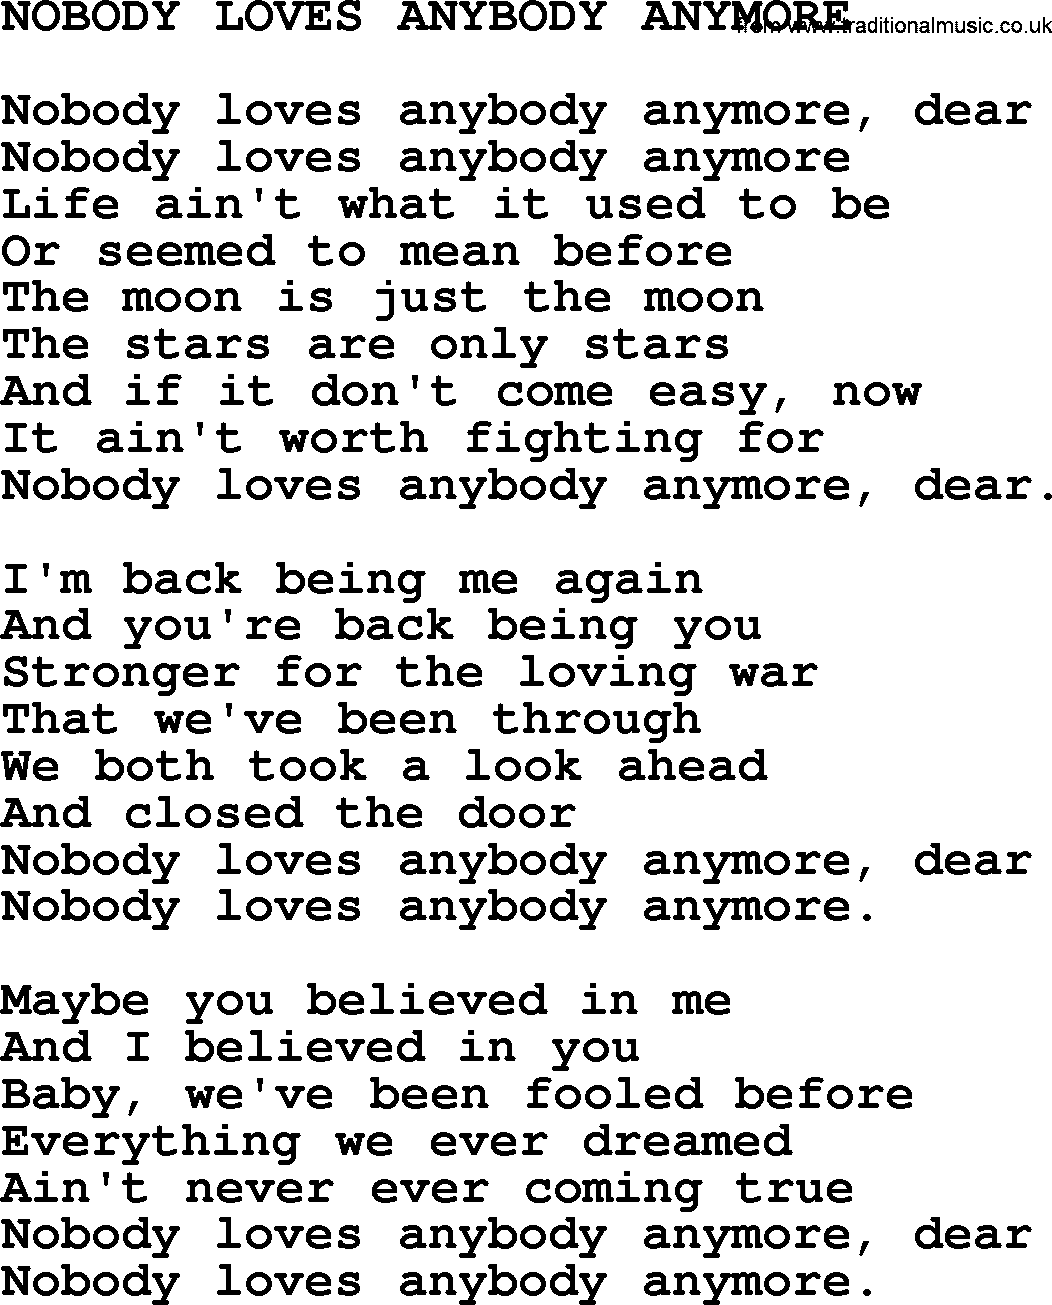 Kris Kristofferson song: Nobody Loves Anybody Anymore lyrics